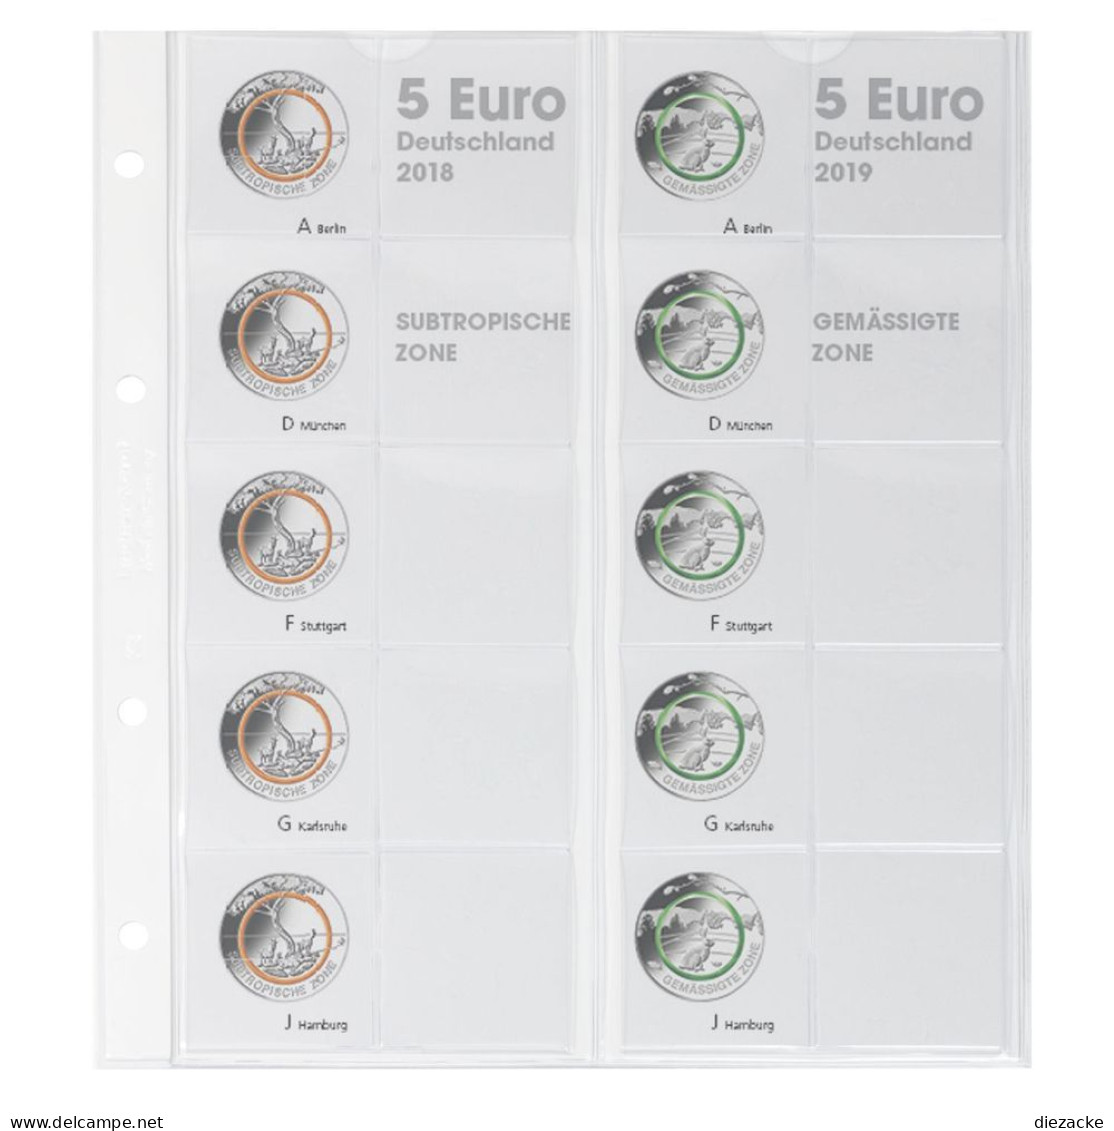 Lindner Vordruckblatt Karat Für 5 Euro-Münzen Polymerring 1119-2 Neu - Materiaal